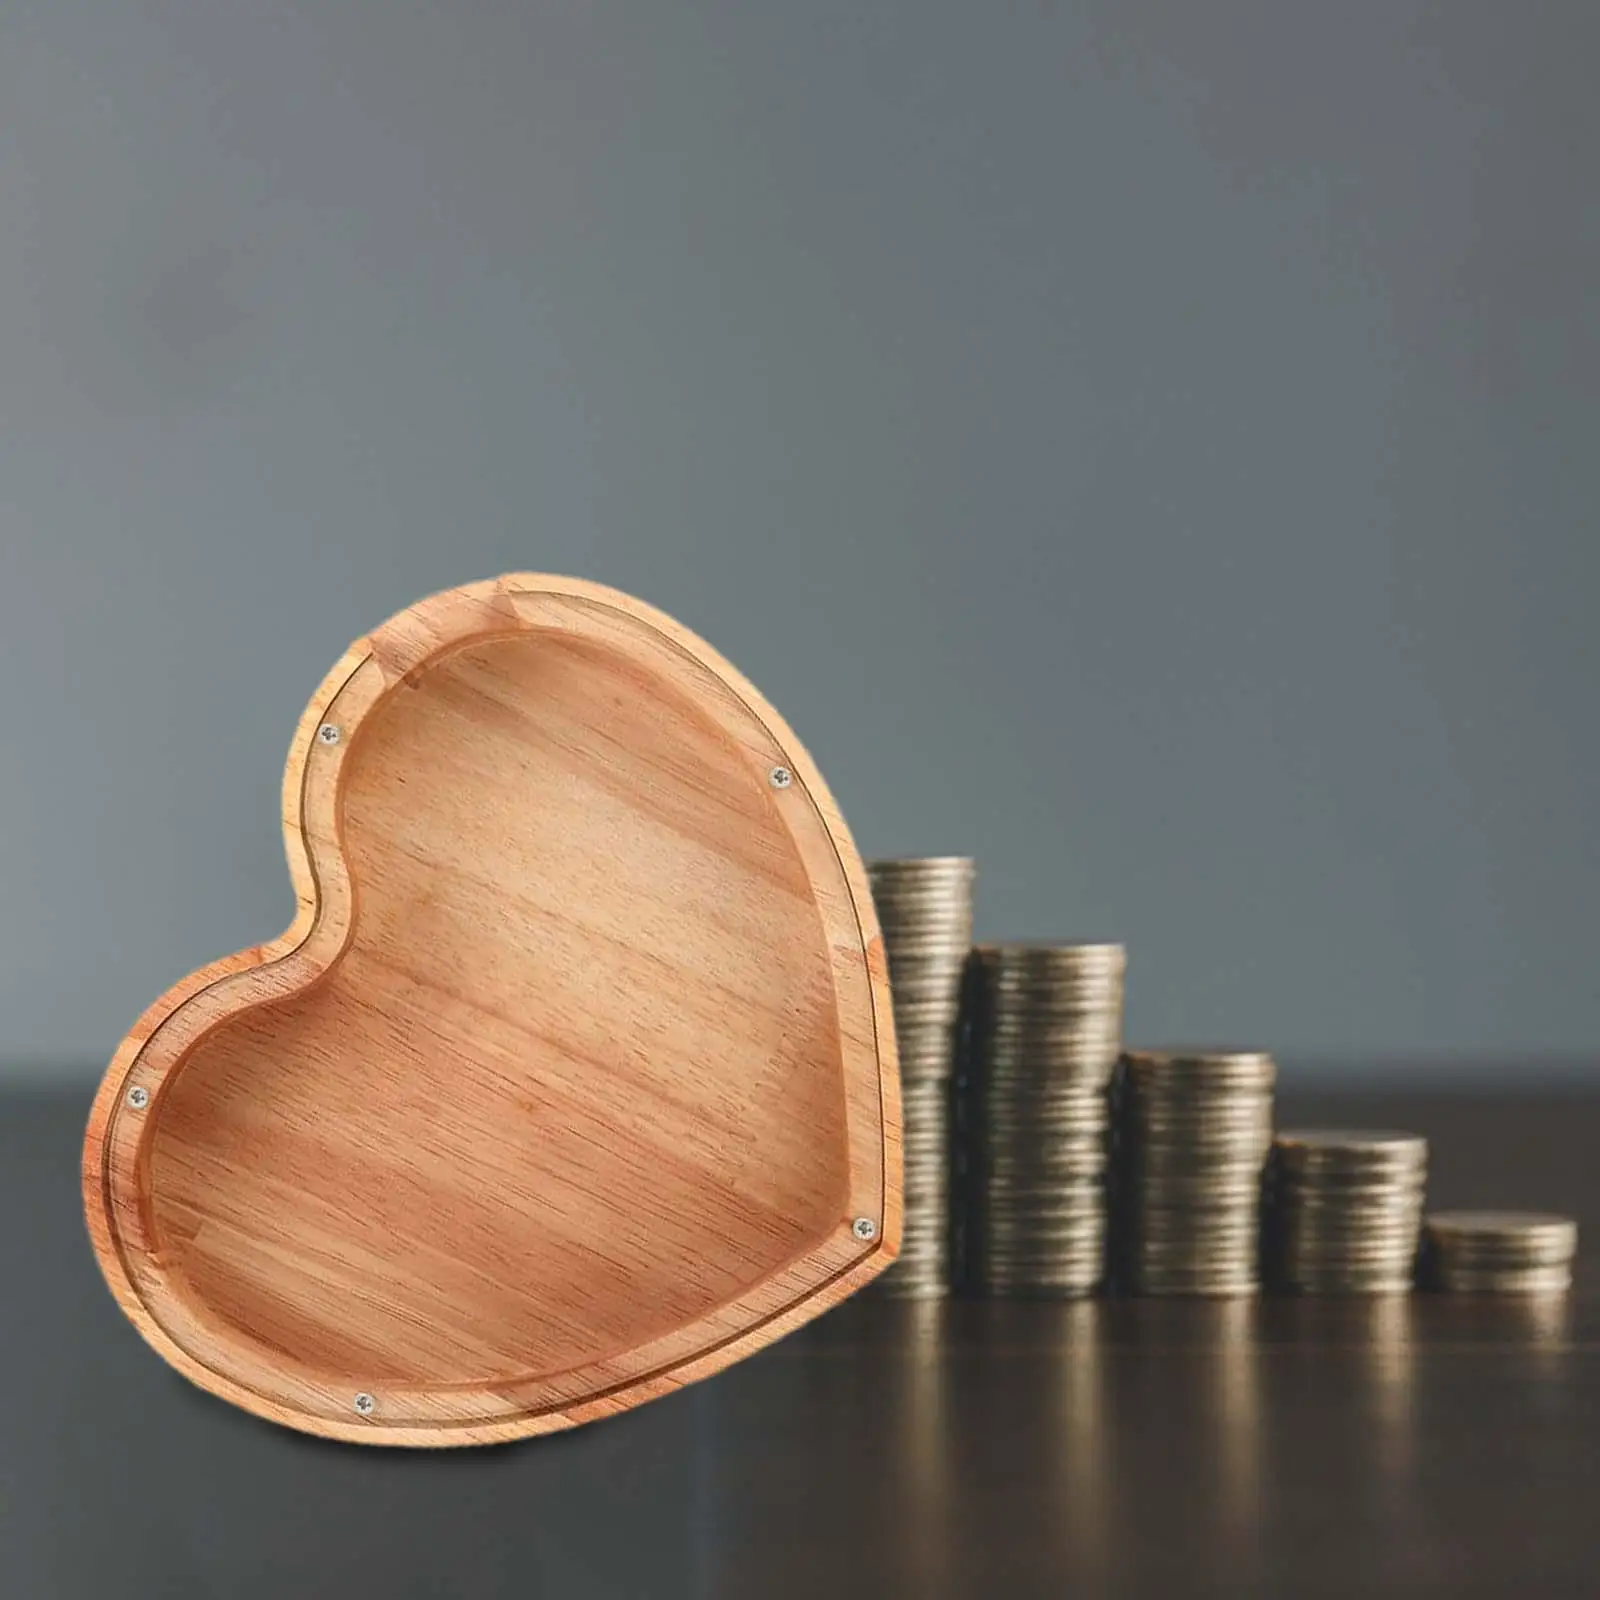 Wooden Piggy Bank Heart Shaped Money Saving Jar Reusable Coin Box for Adults